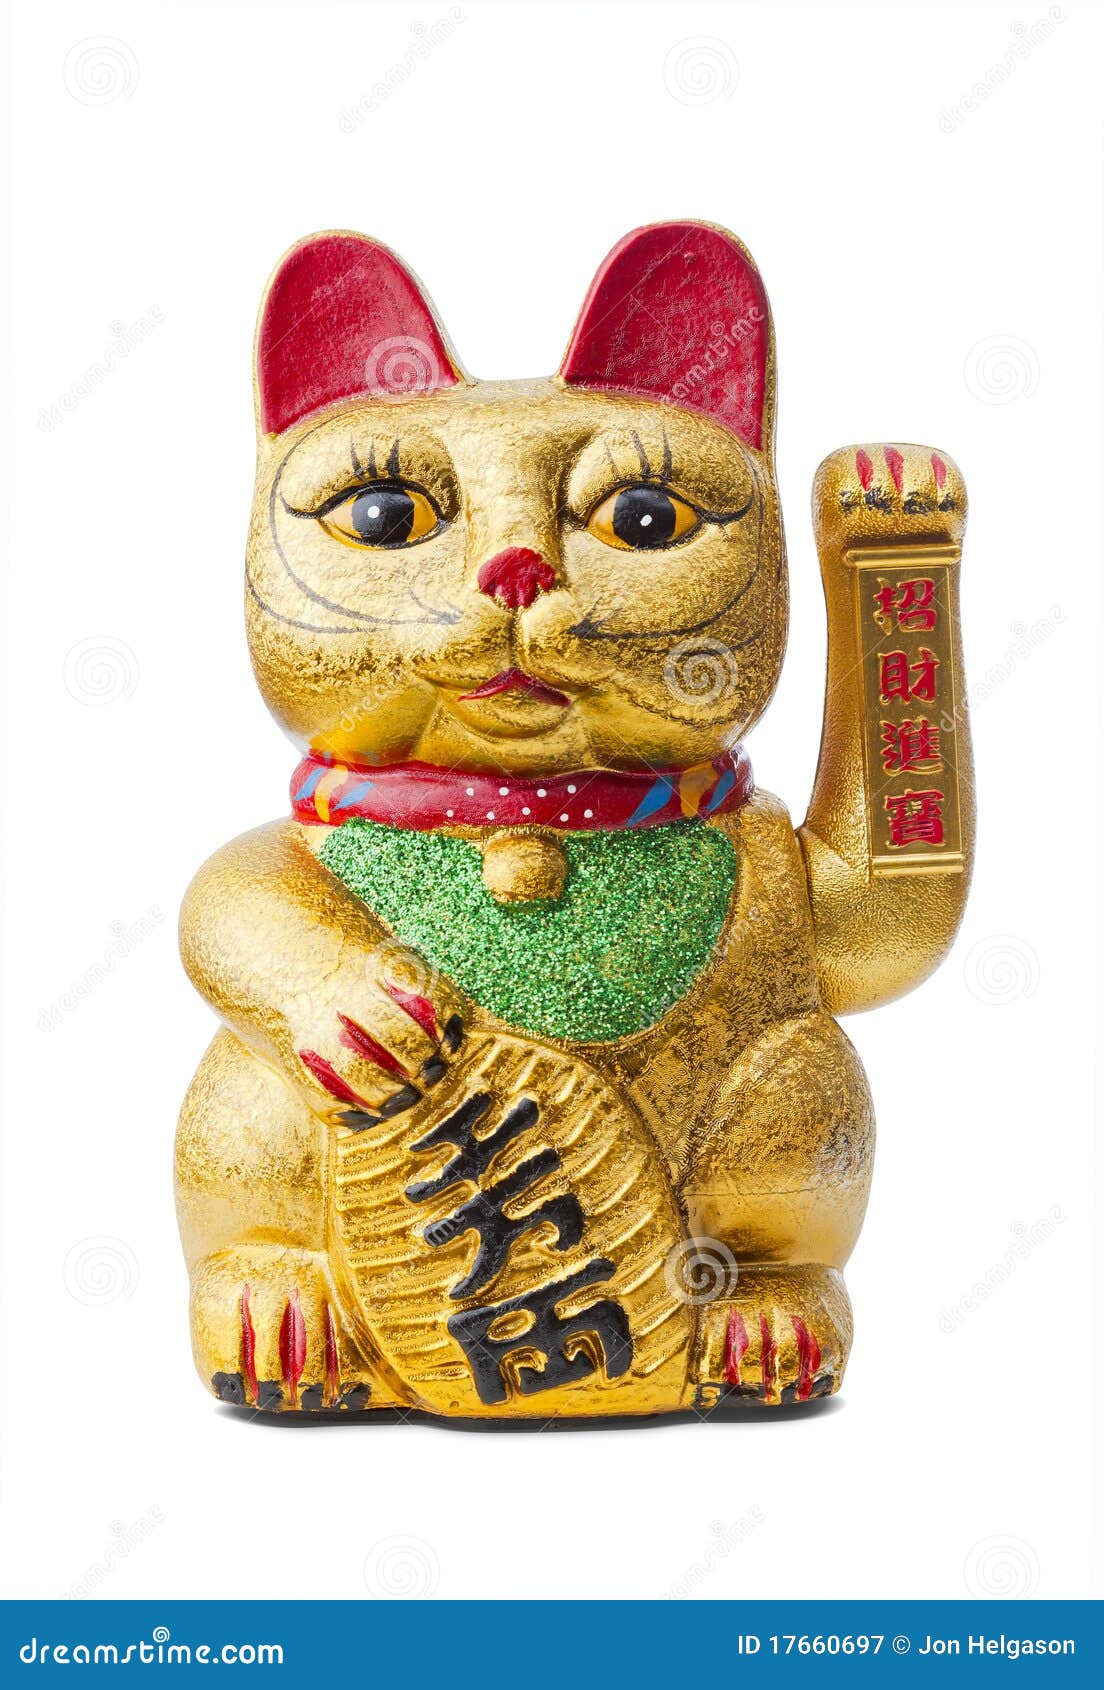 amarillo Maneki-Neko% # ýï% de gato banco de monedas figura decorativa hecho de cerámica japonés 3,7 pulgadas de altura% # ýï% con cama de futón 